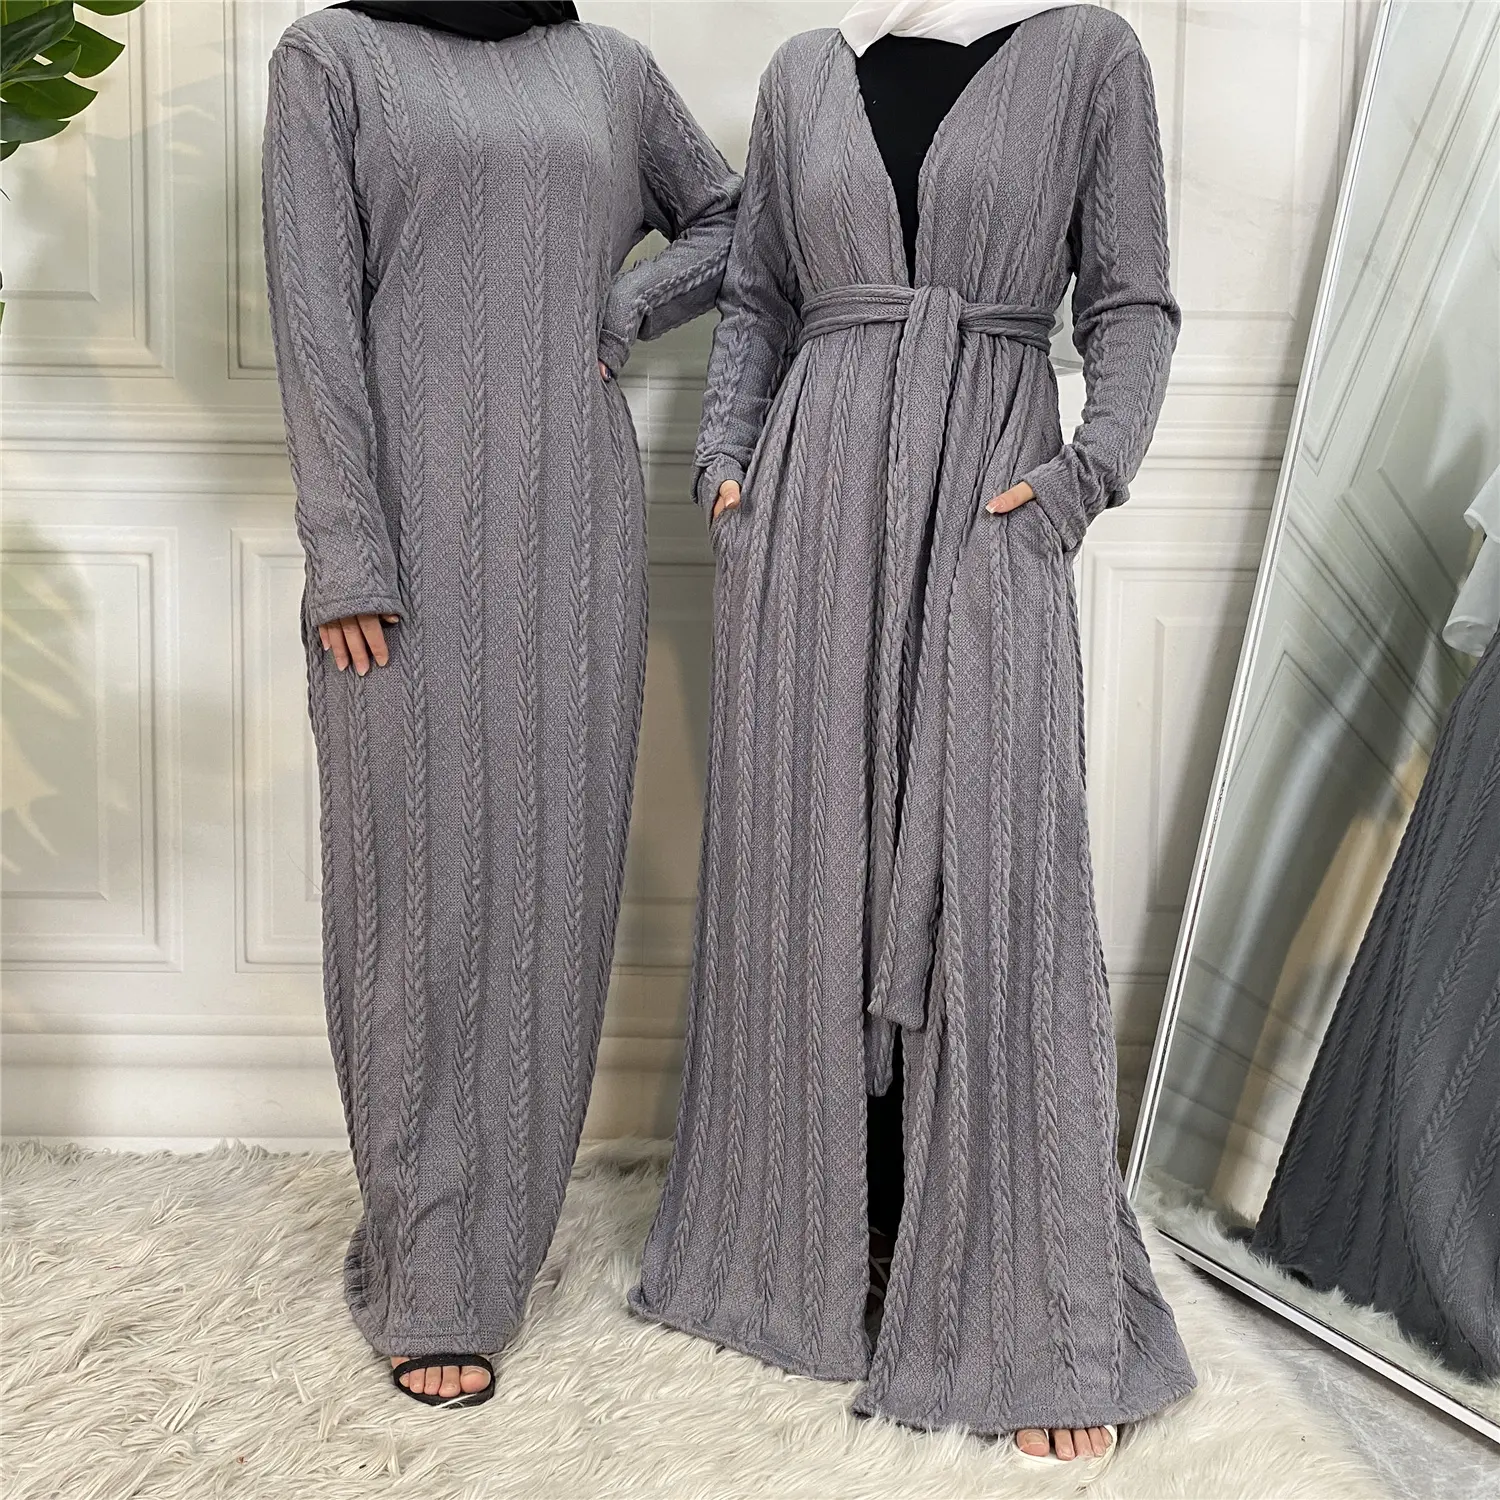 Baju Dalaman Sweater 6 Warna Baju Muslim Musim Dingin Baju Islami Baju Musim Gugur Baju Abaya Dress